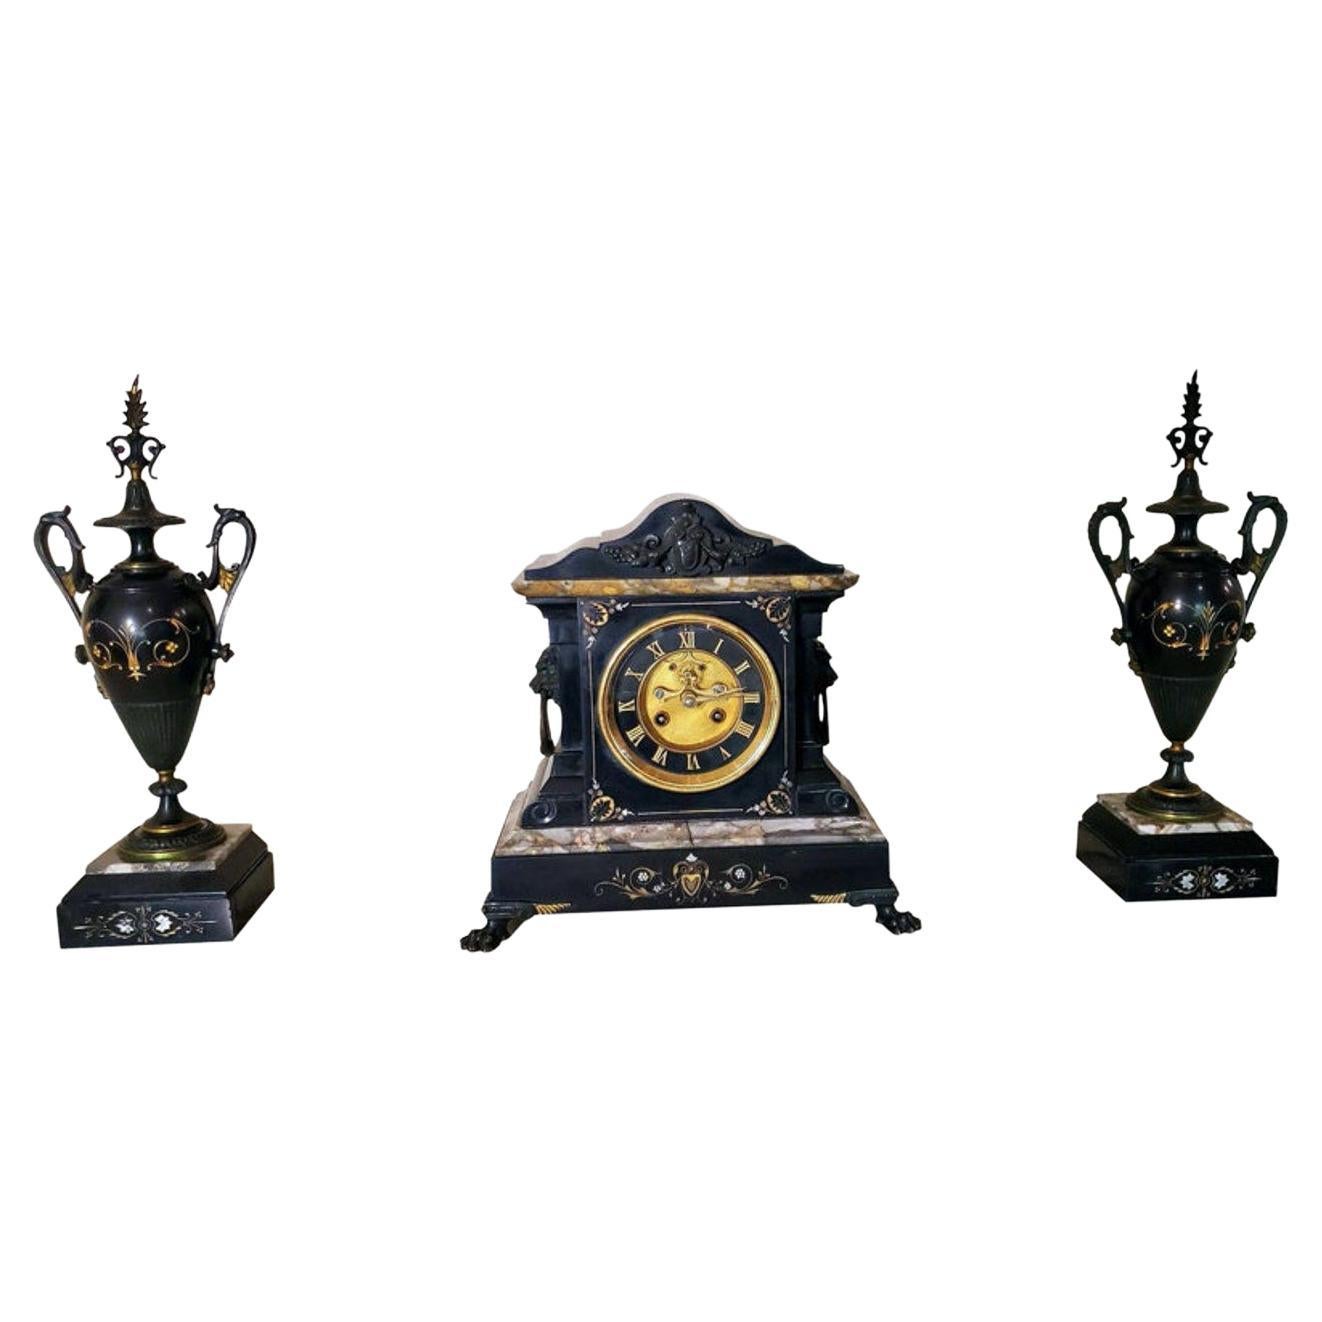 Antique French Neoclassical Revival Mantel Clock & Urn Garniture Set